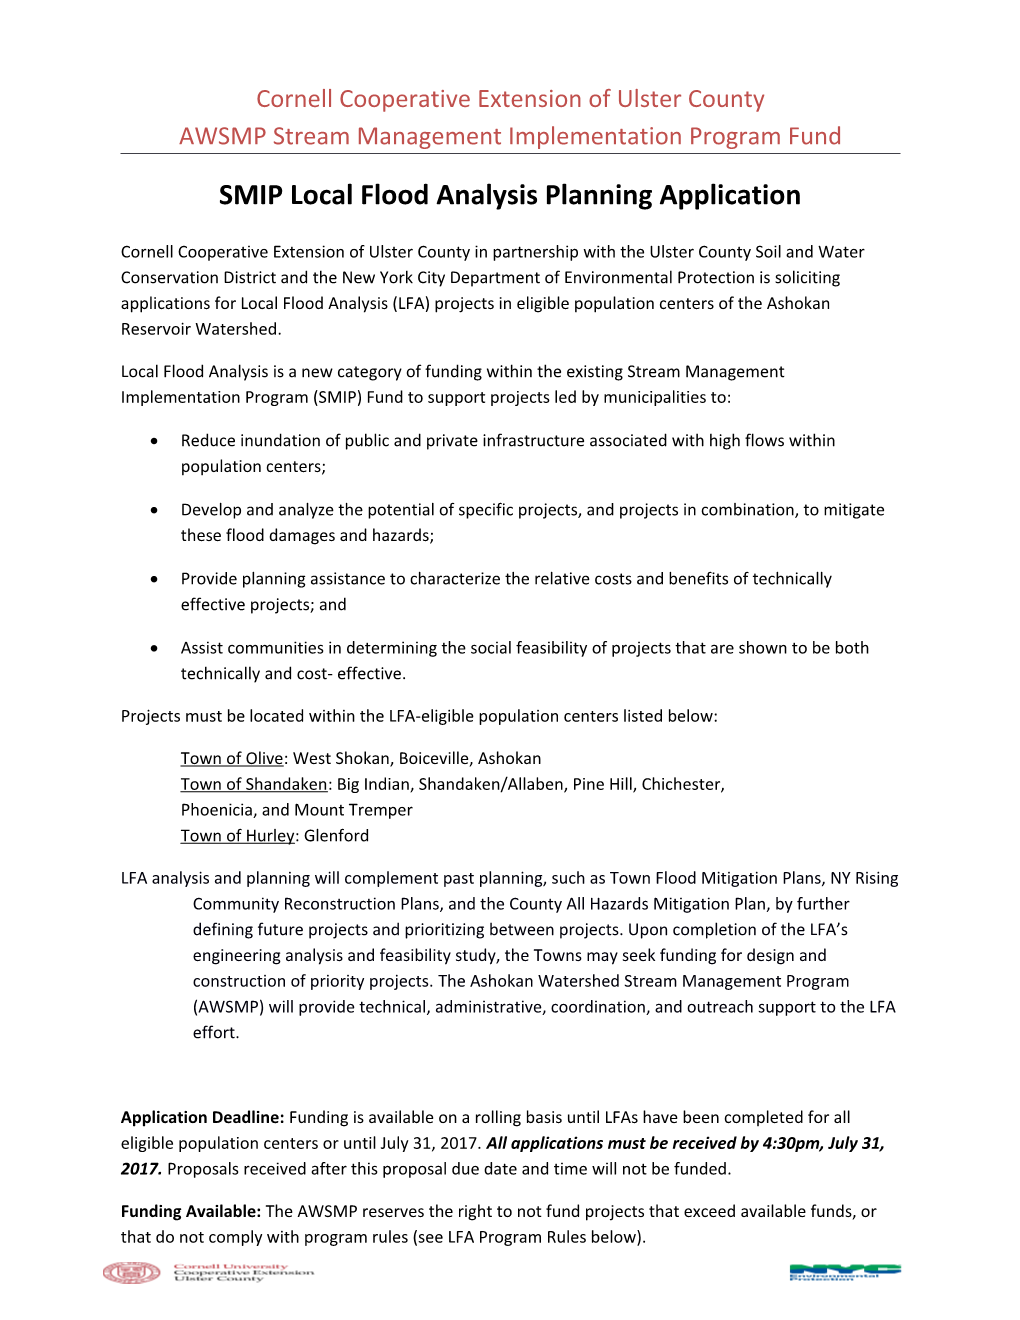 SMIP Local Flood Analysis Planning Application